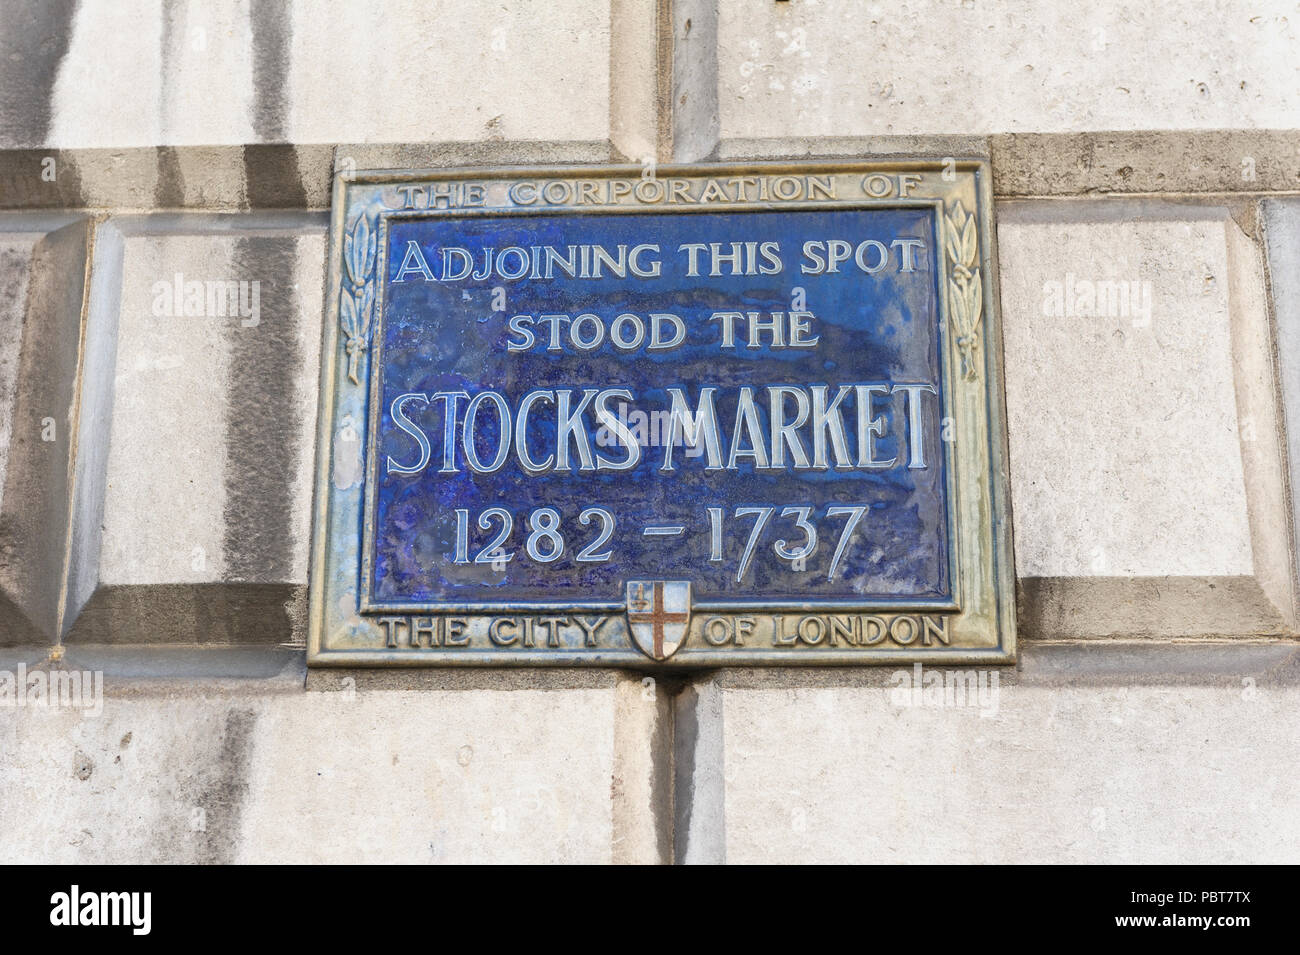 Stocks Market blue historic plaque, London, England, United Kingdom Stock Photo